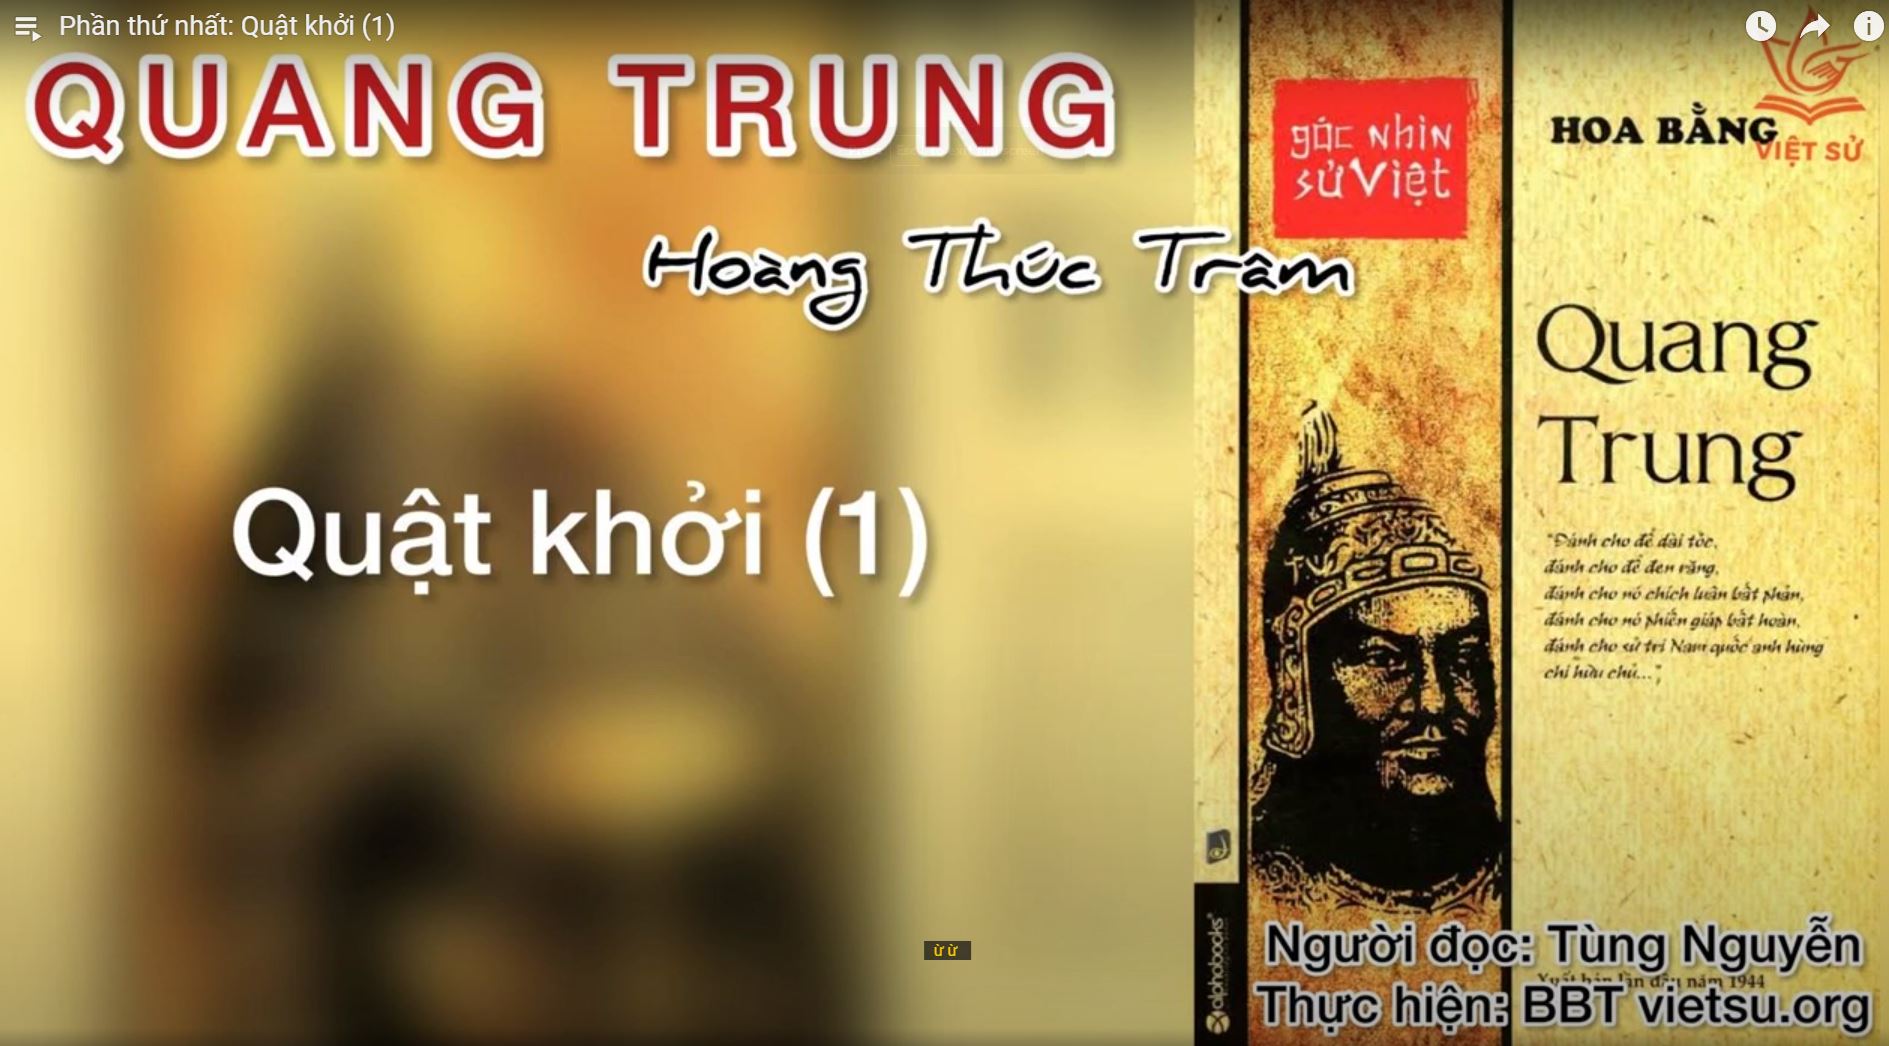 Quang Trung (audio)